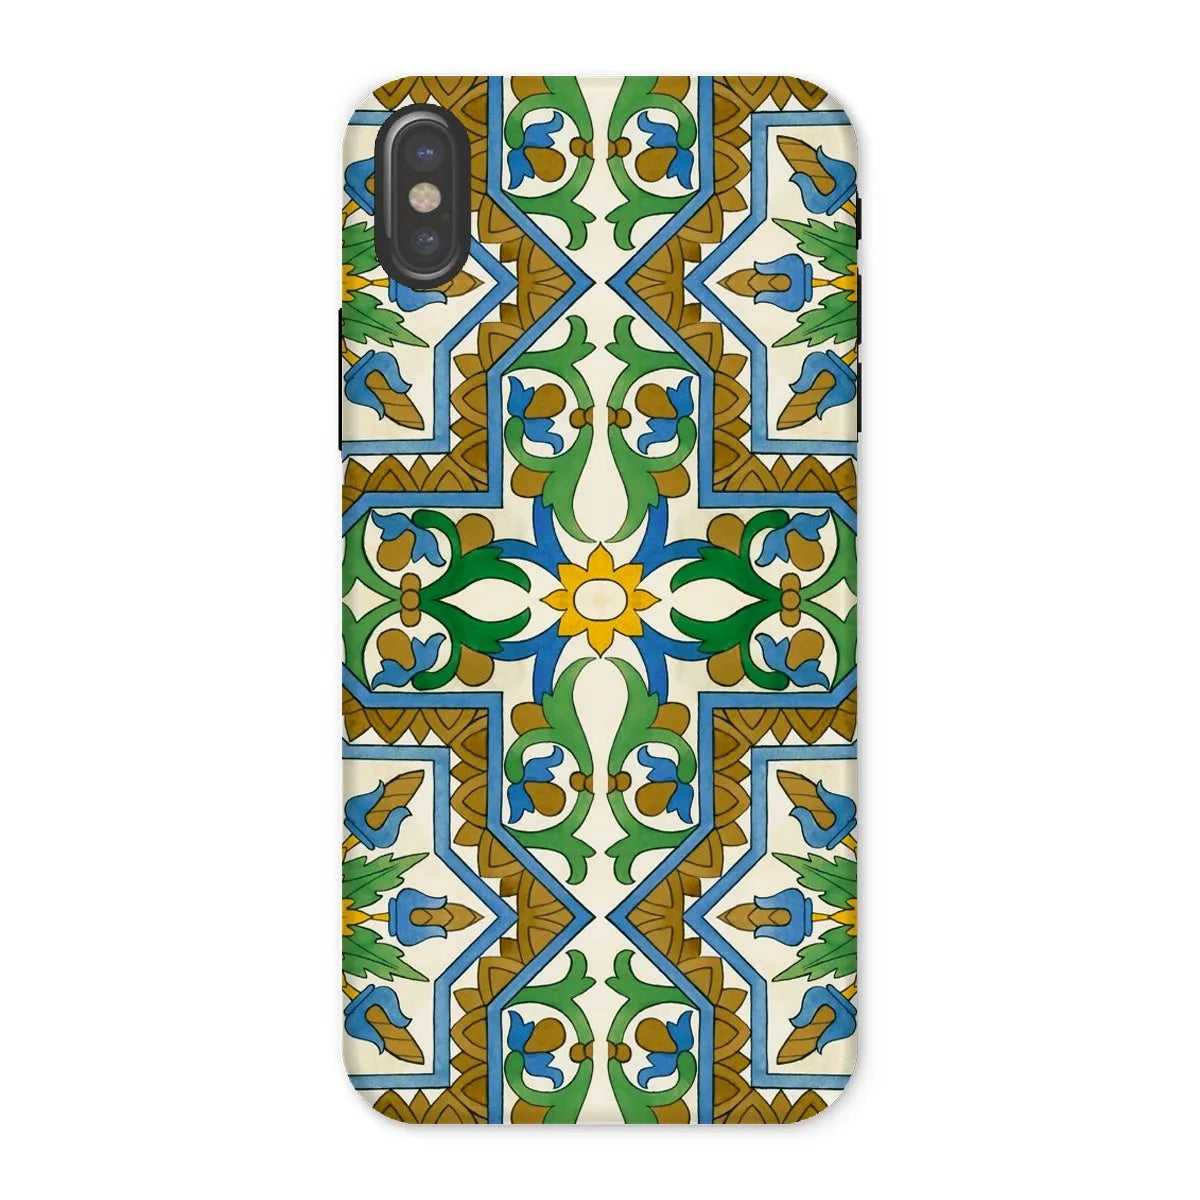 Moreish Moorish - Spanish Aesthetic Pattern Phone Case - Iphone x / Matte - Mobile Phone Cases - Aesthetic Art